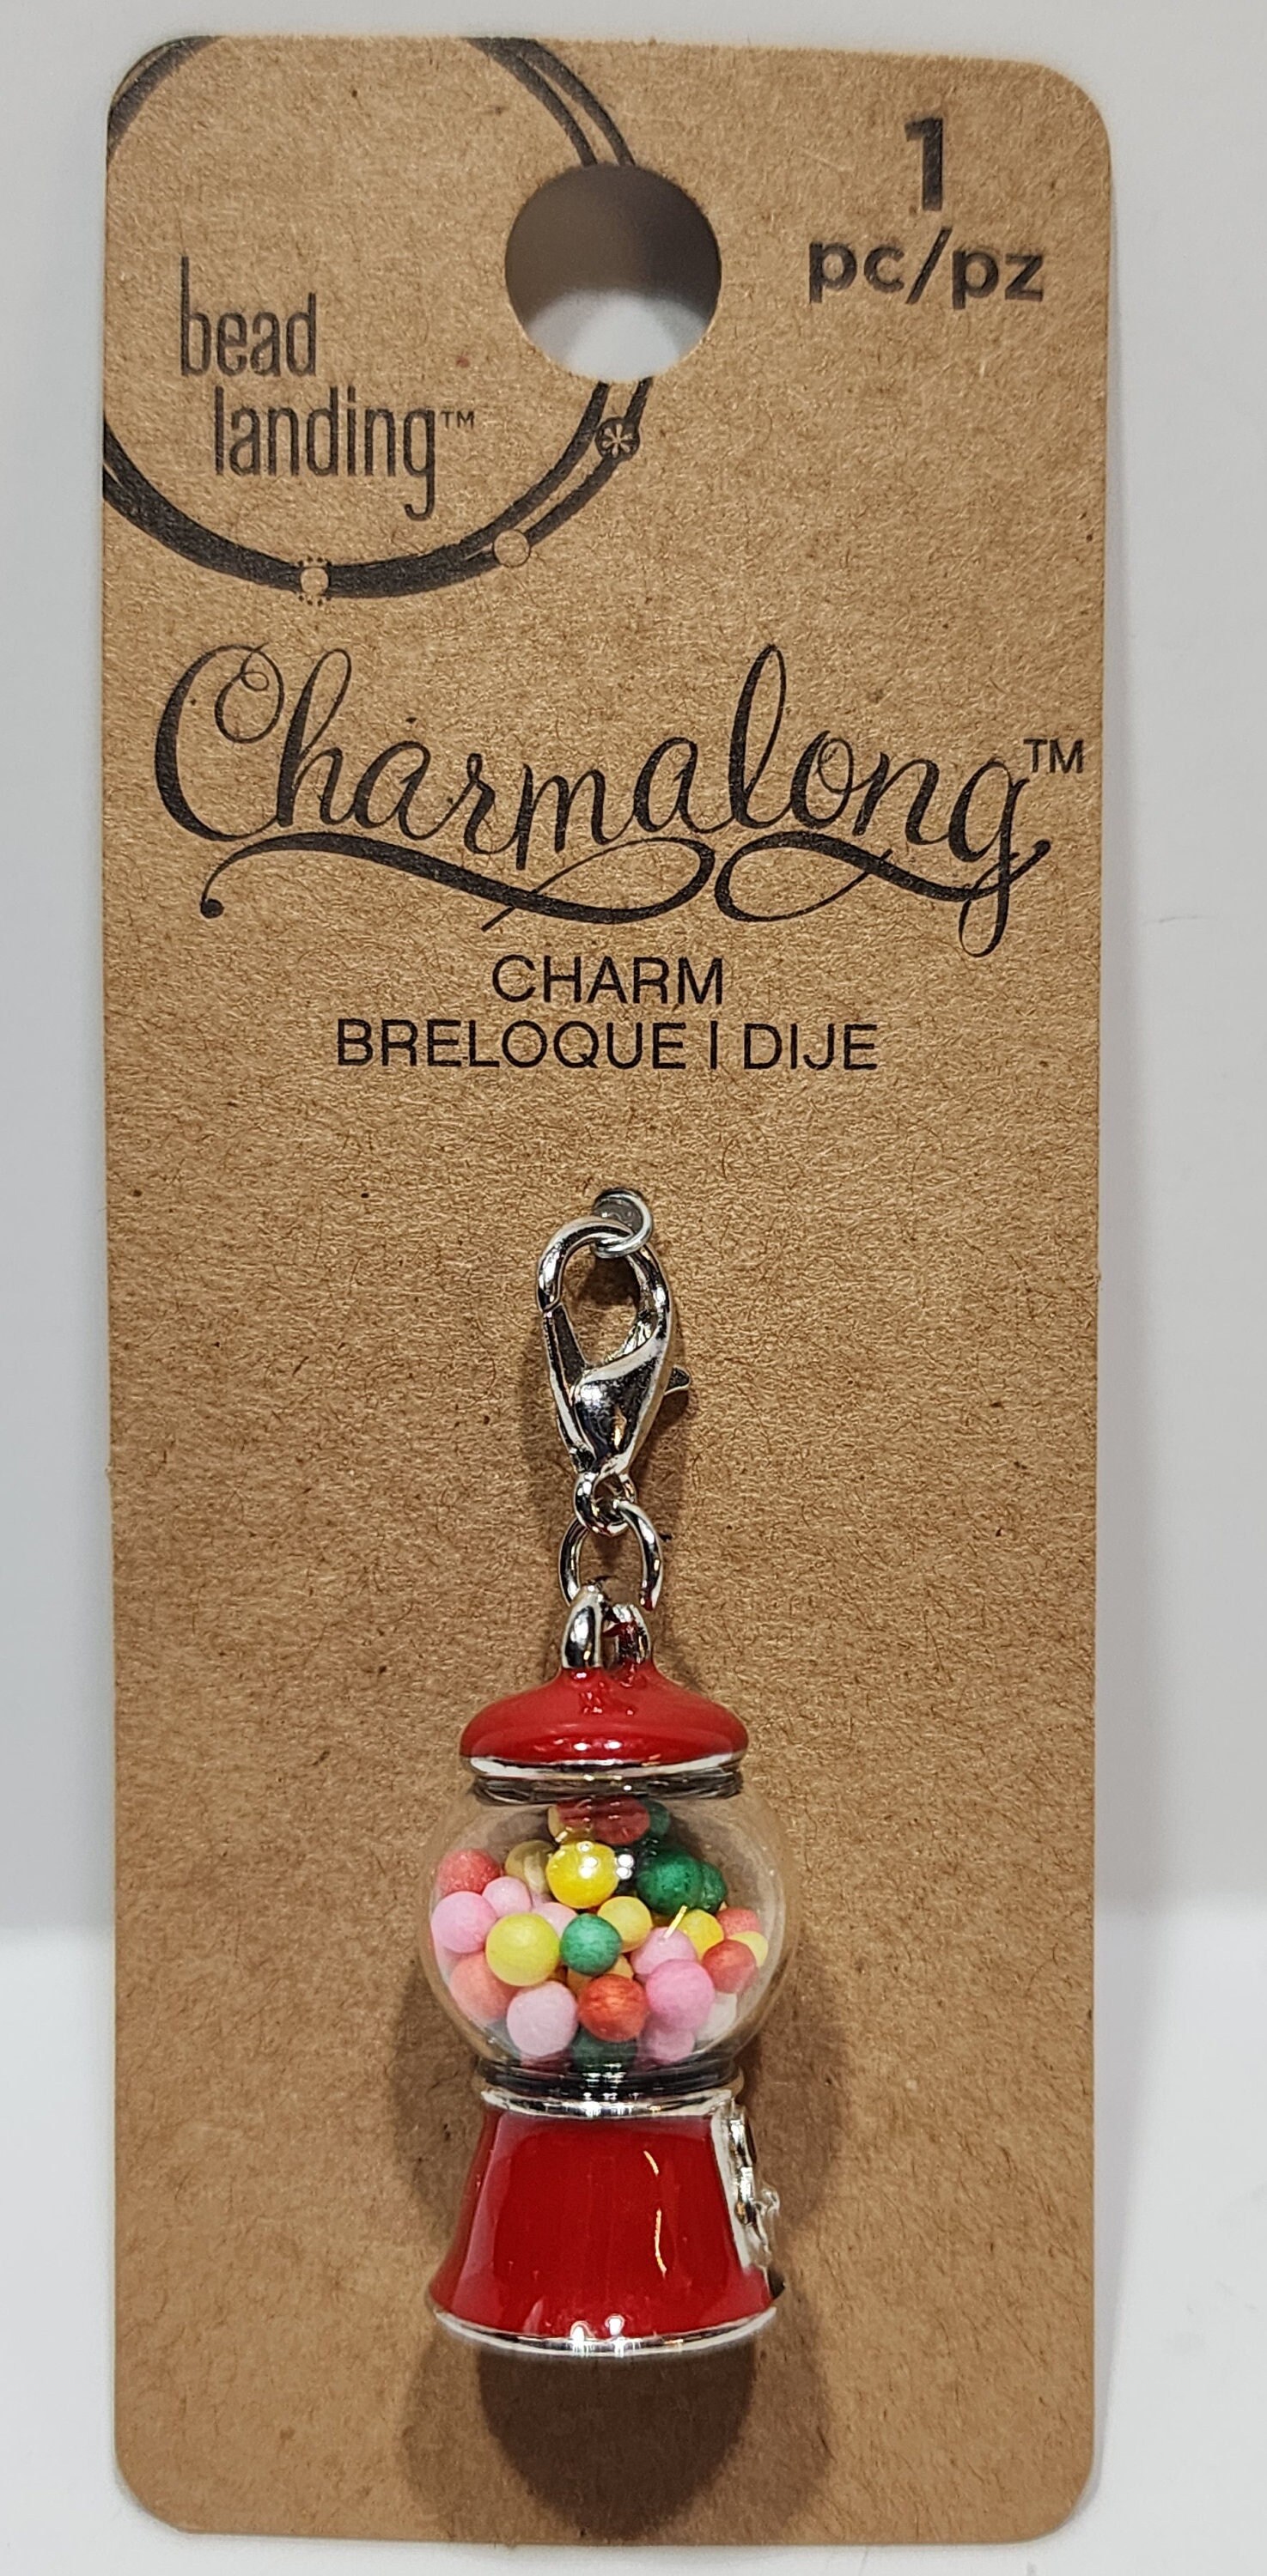 Bead Landing Charmalong Silver-tone Charm Vintage Bubble Gum Machine